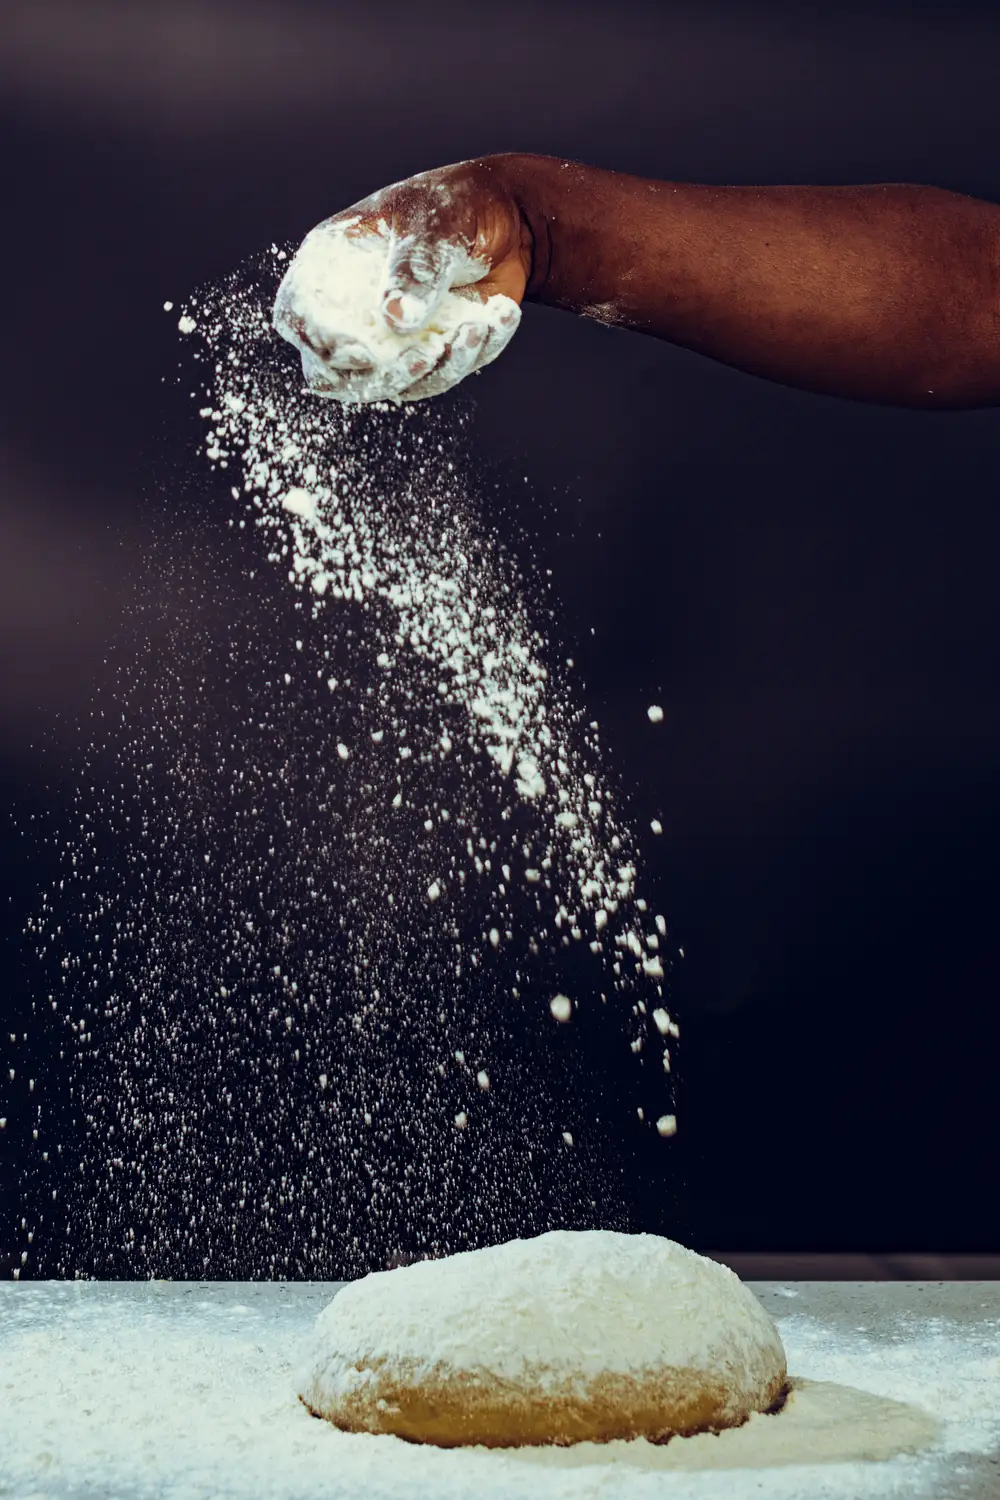 Baker sprinkling flour for dough kneading